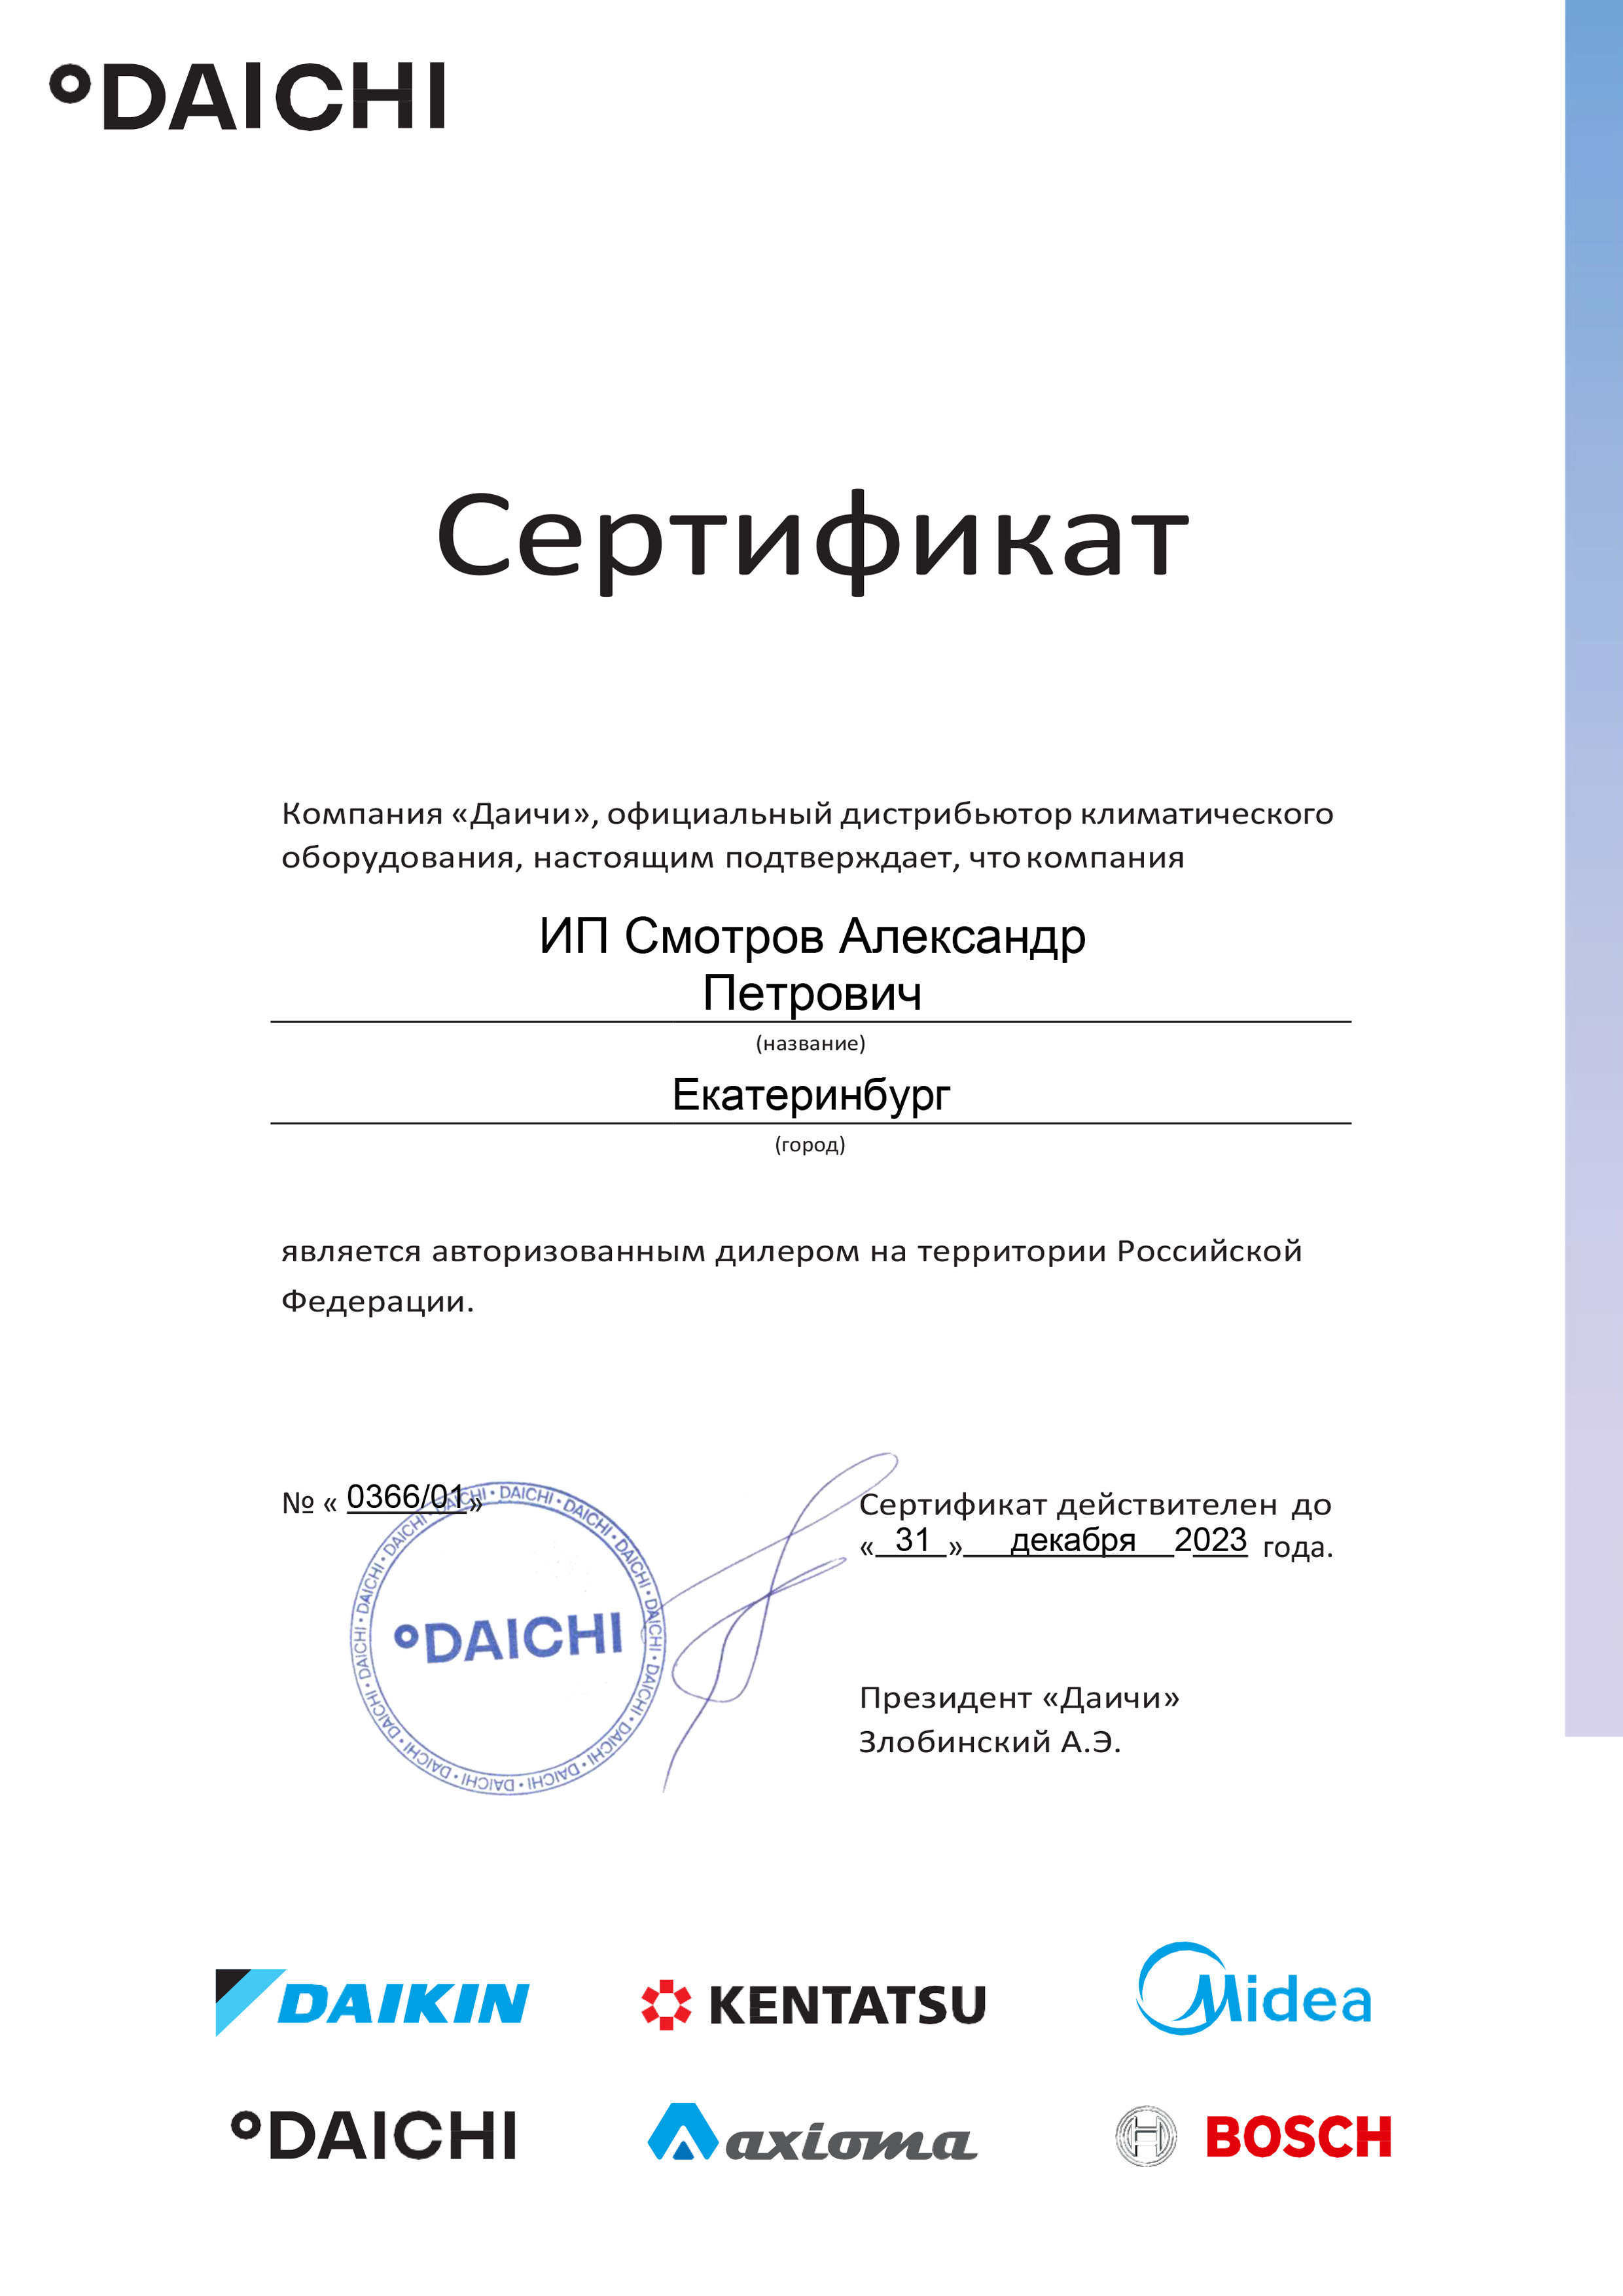 daichi-ip Kondicioner Axioma ASX07H1/ASB07H1 kypit v Ekaterinbyrge v internet-magazine KlimatMarket96.ry Сертификат дилера